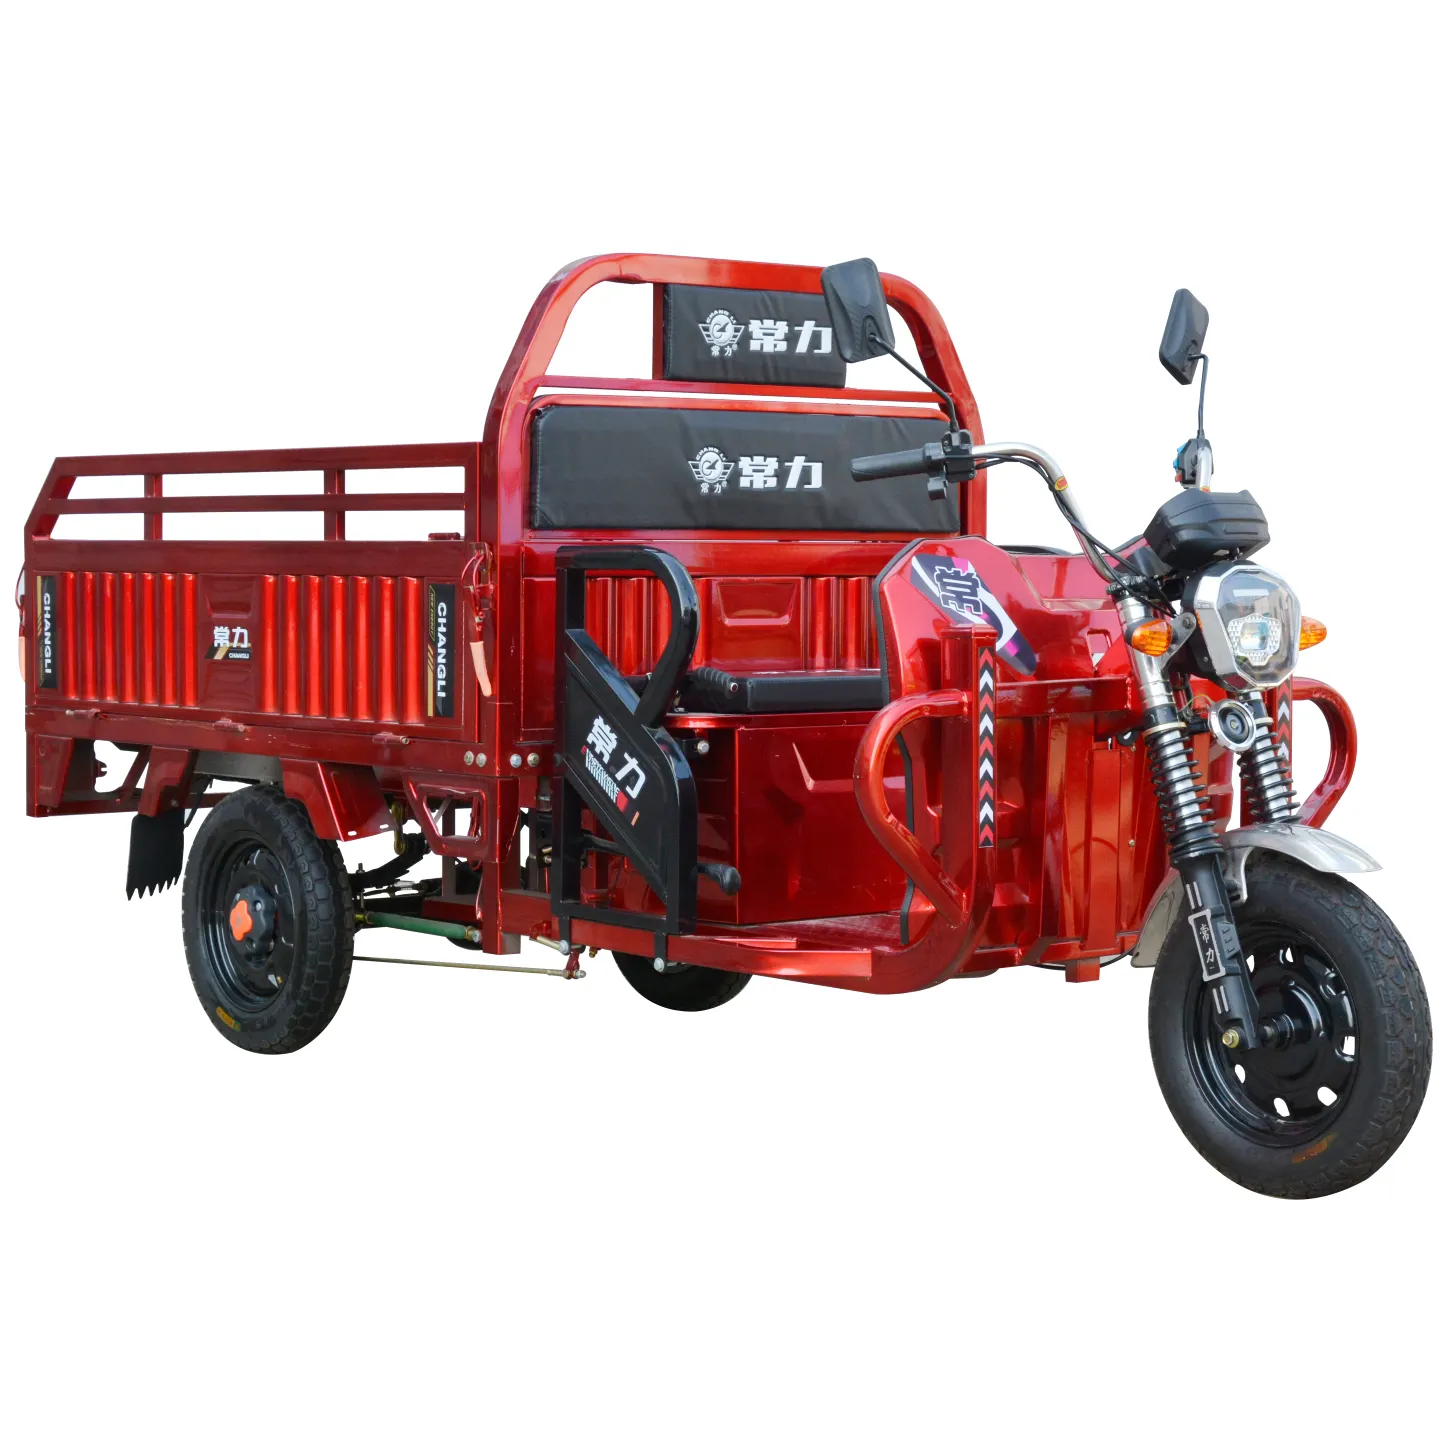 Sepeda motor listrik, 60V 1000W tugas berat 5 roda kargo dewasa sepeda motor listrik becak